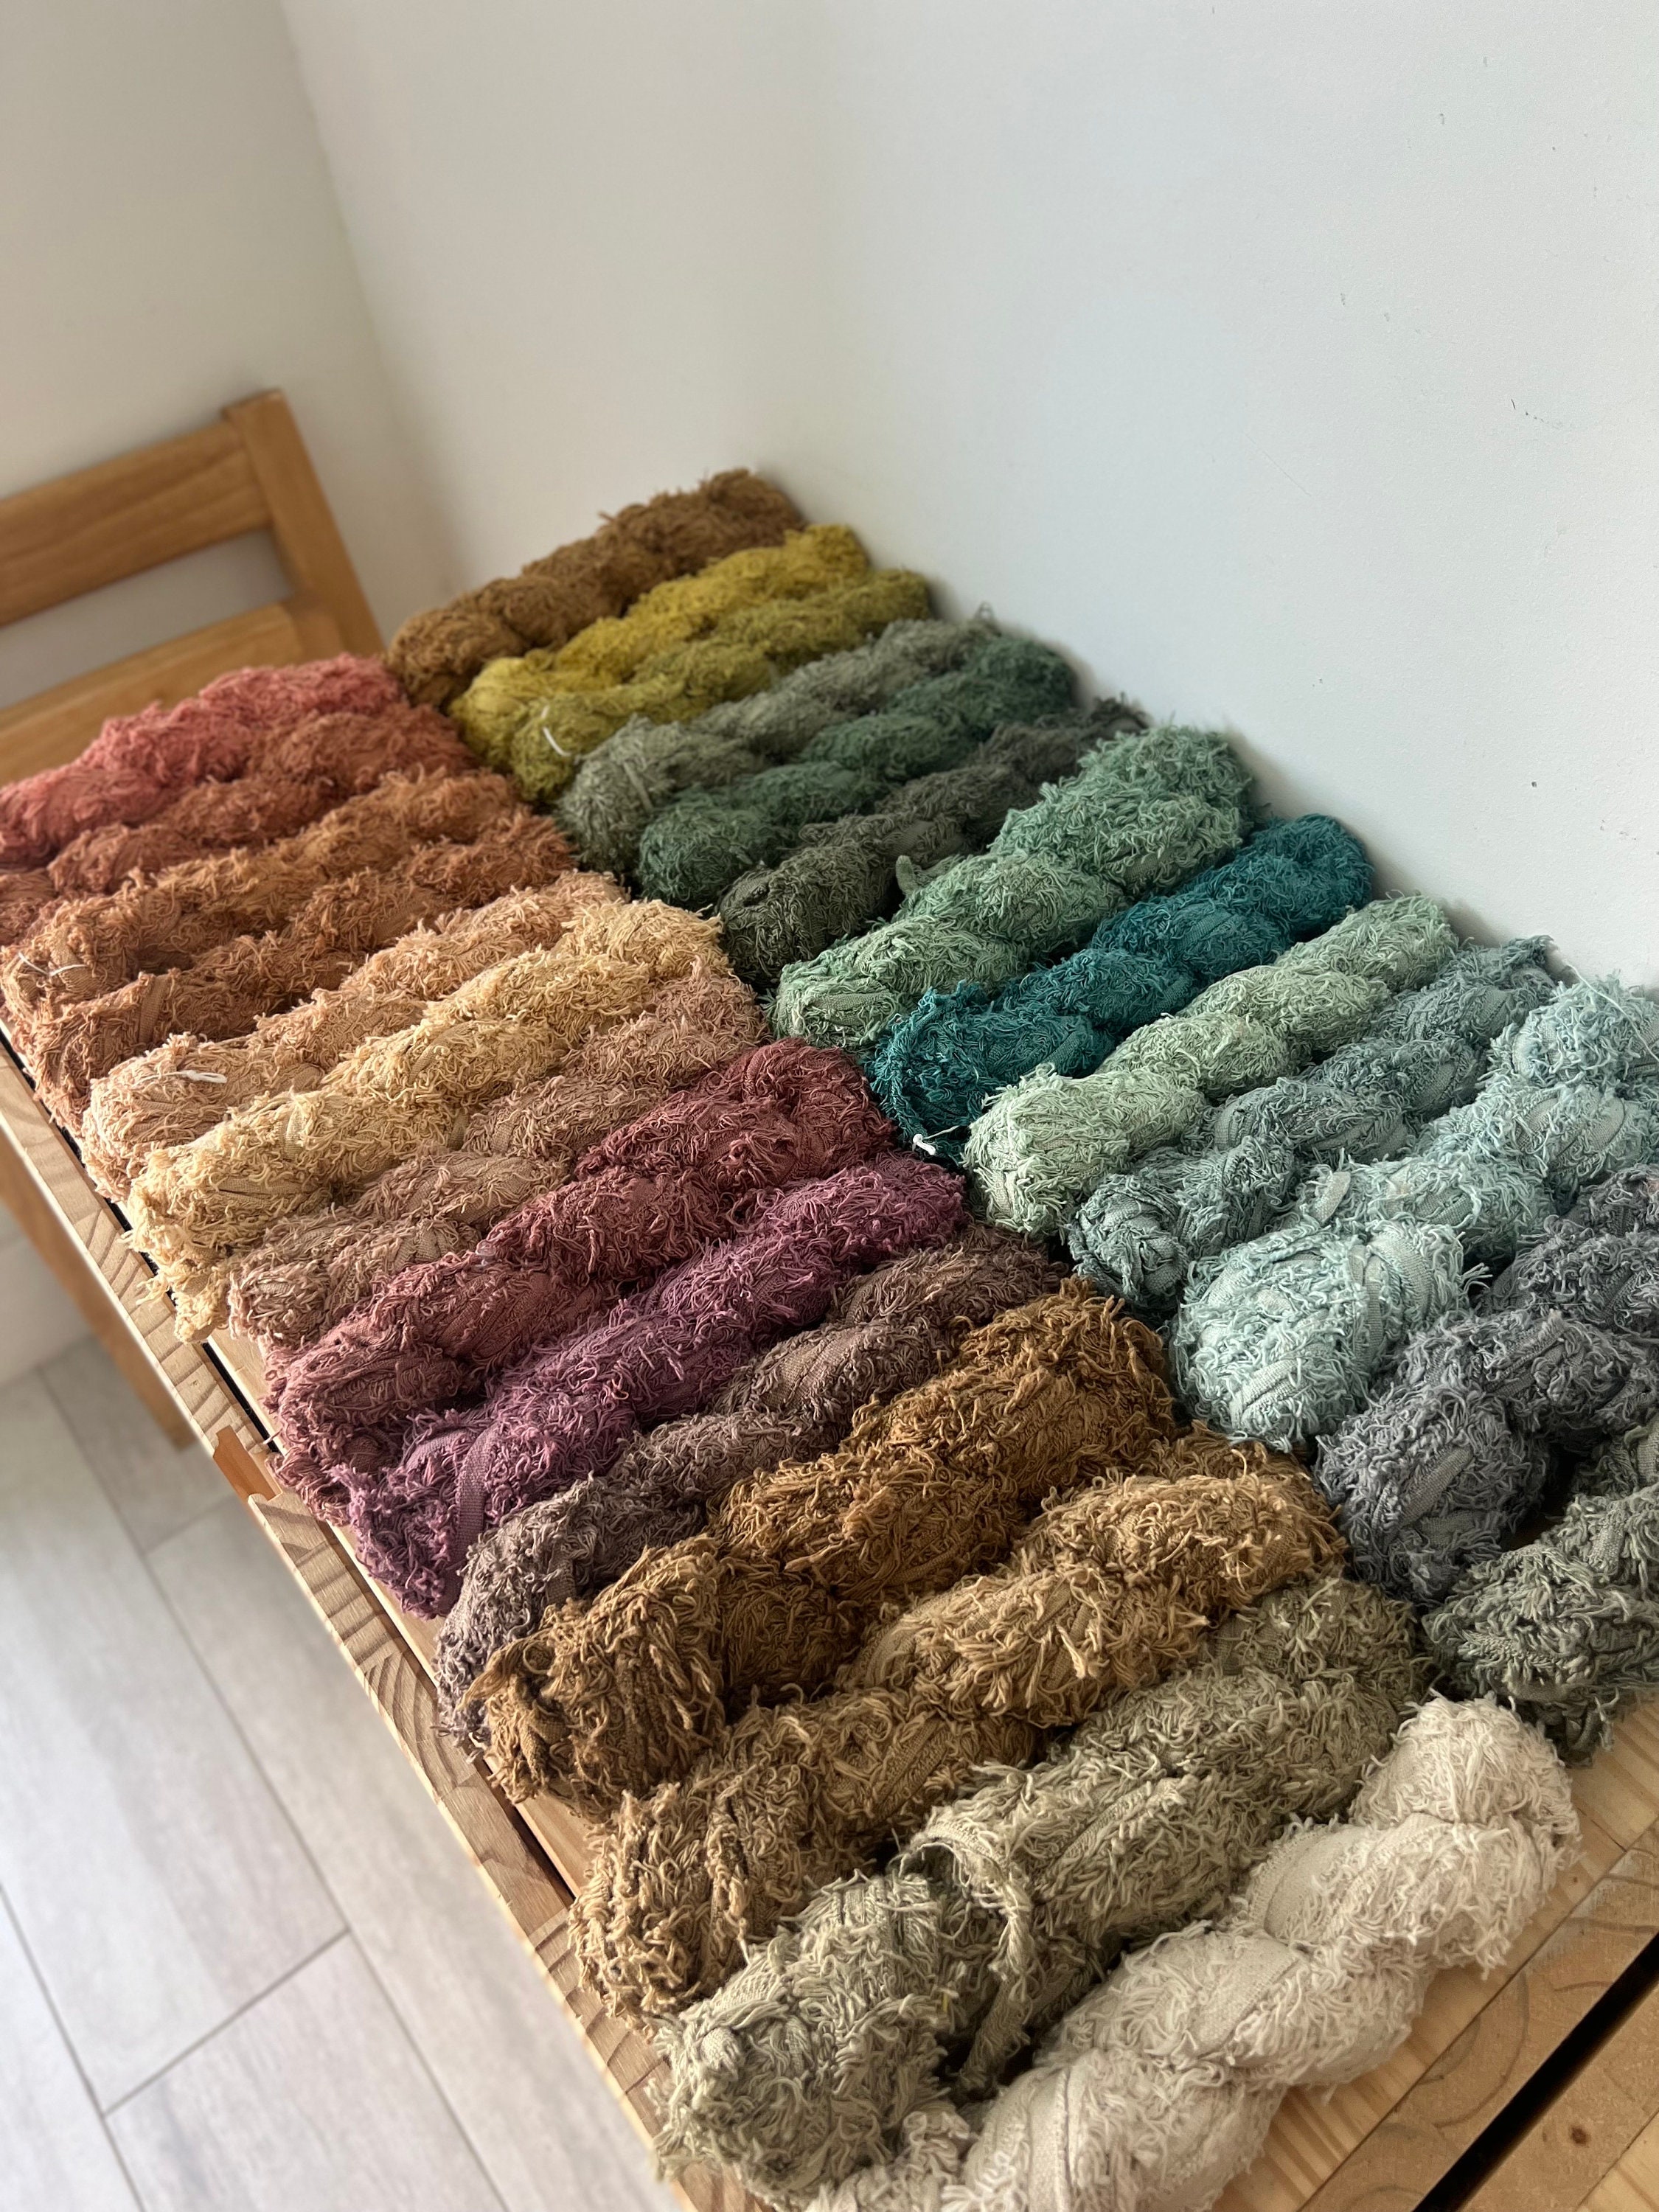 400g/lot 100% Polyester Yarn Weave Crochet Yarn For Woven Mats Diy